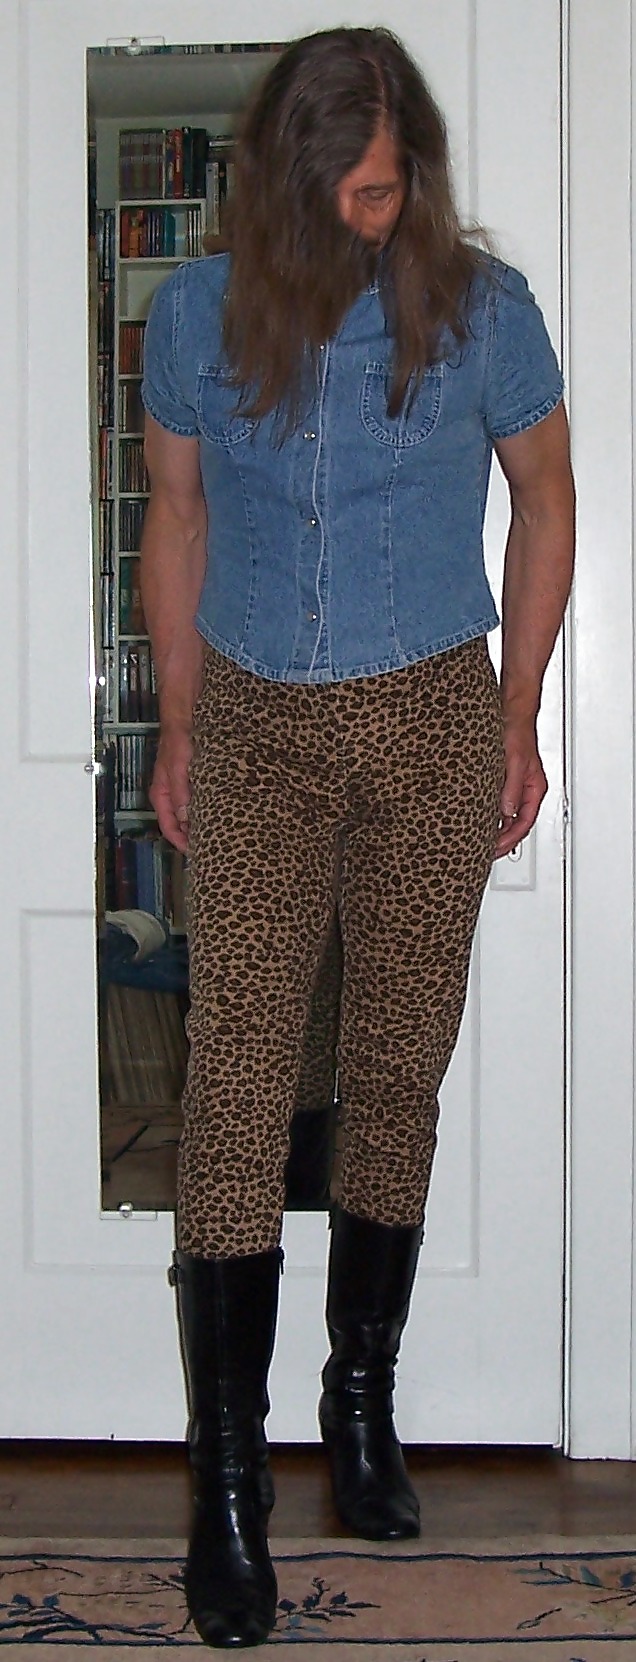 Crossdressing - ragazza leopardo
 #7202715